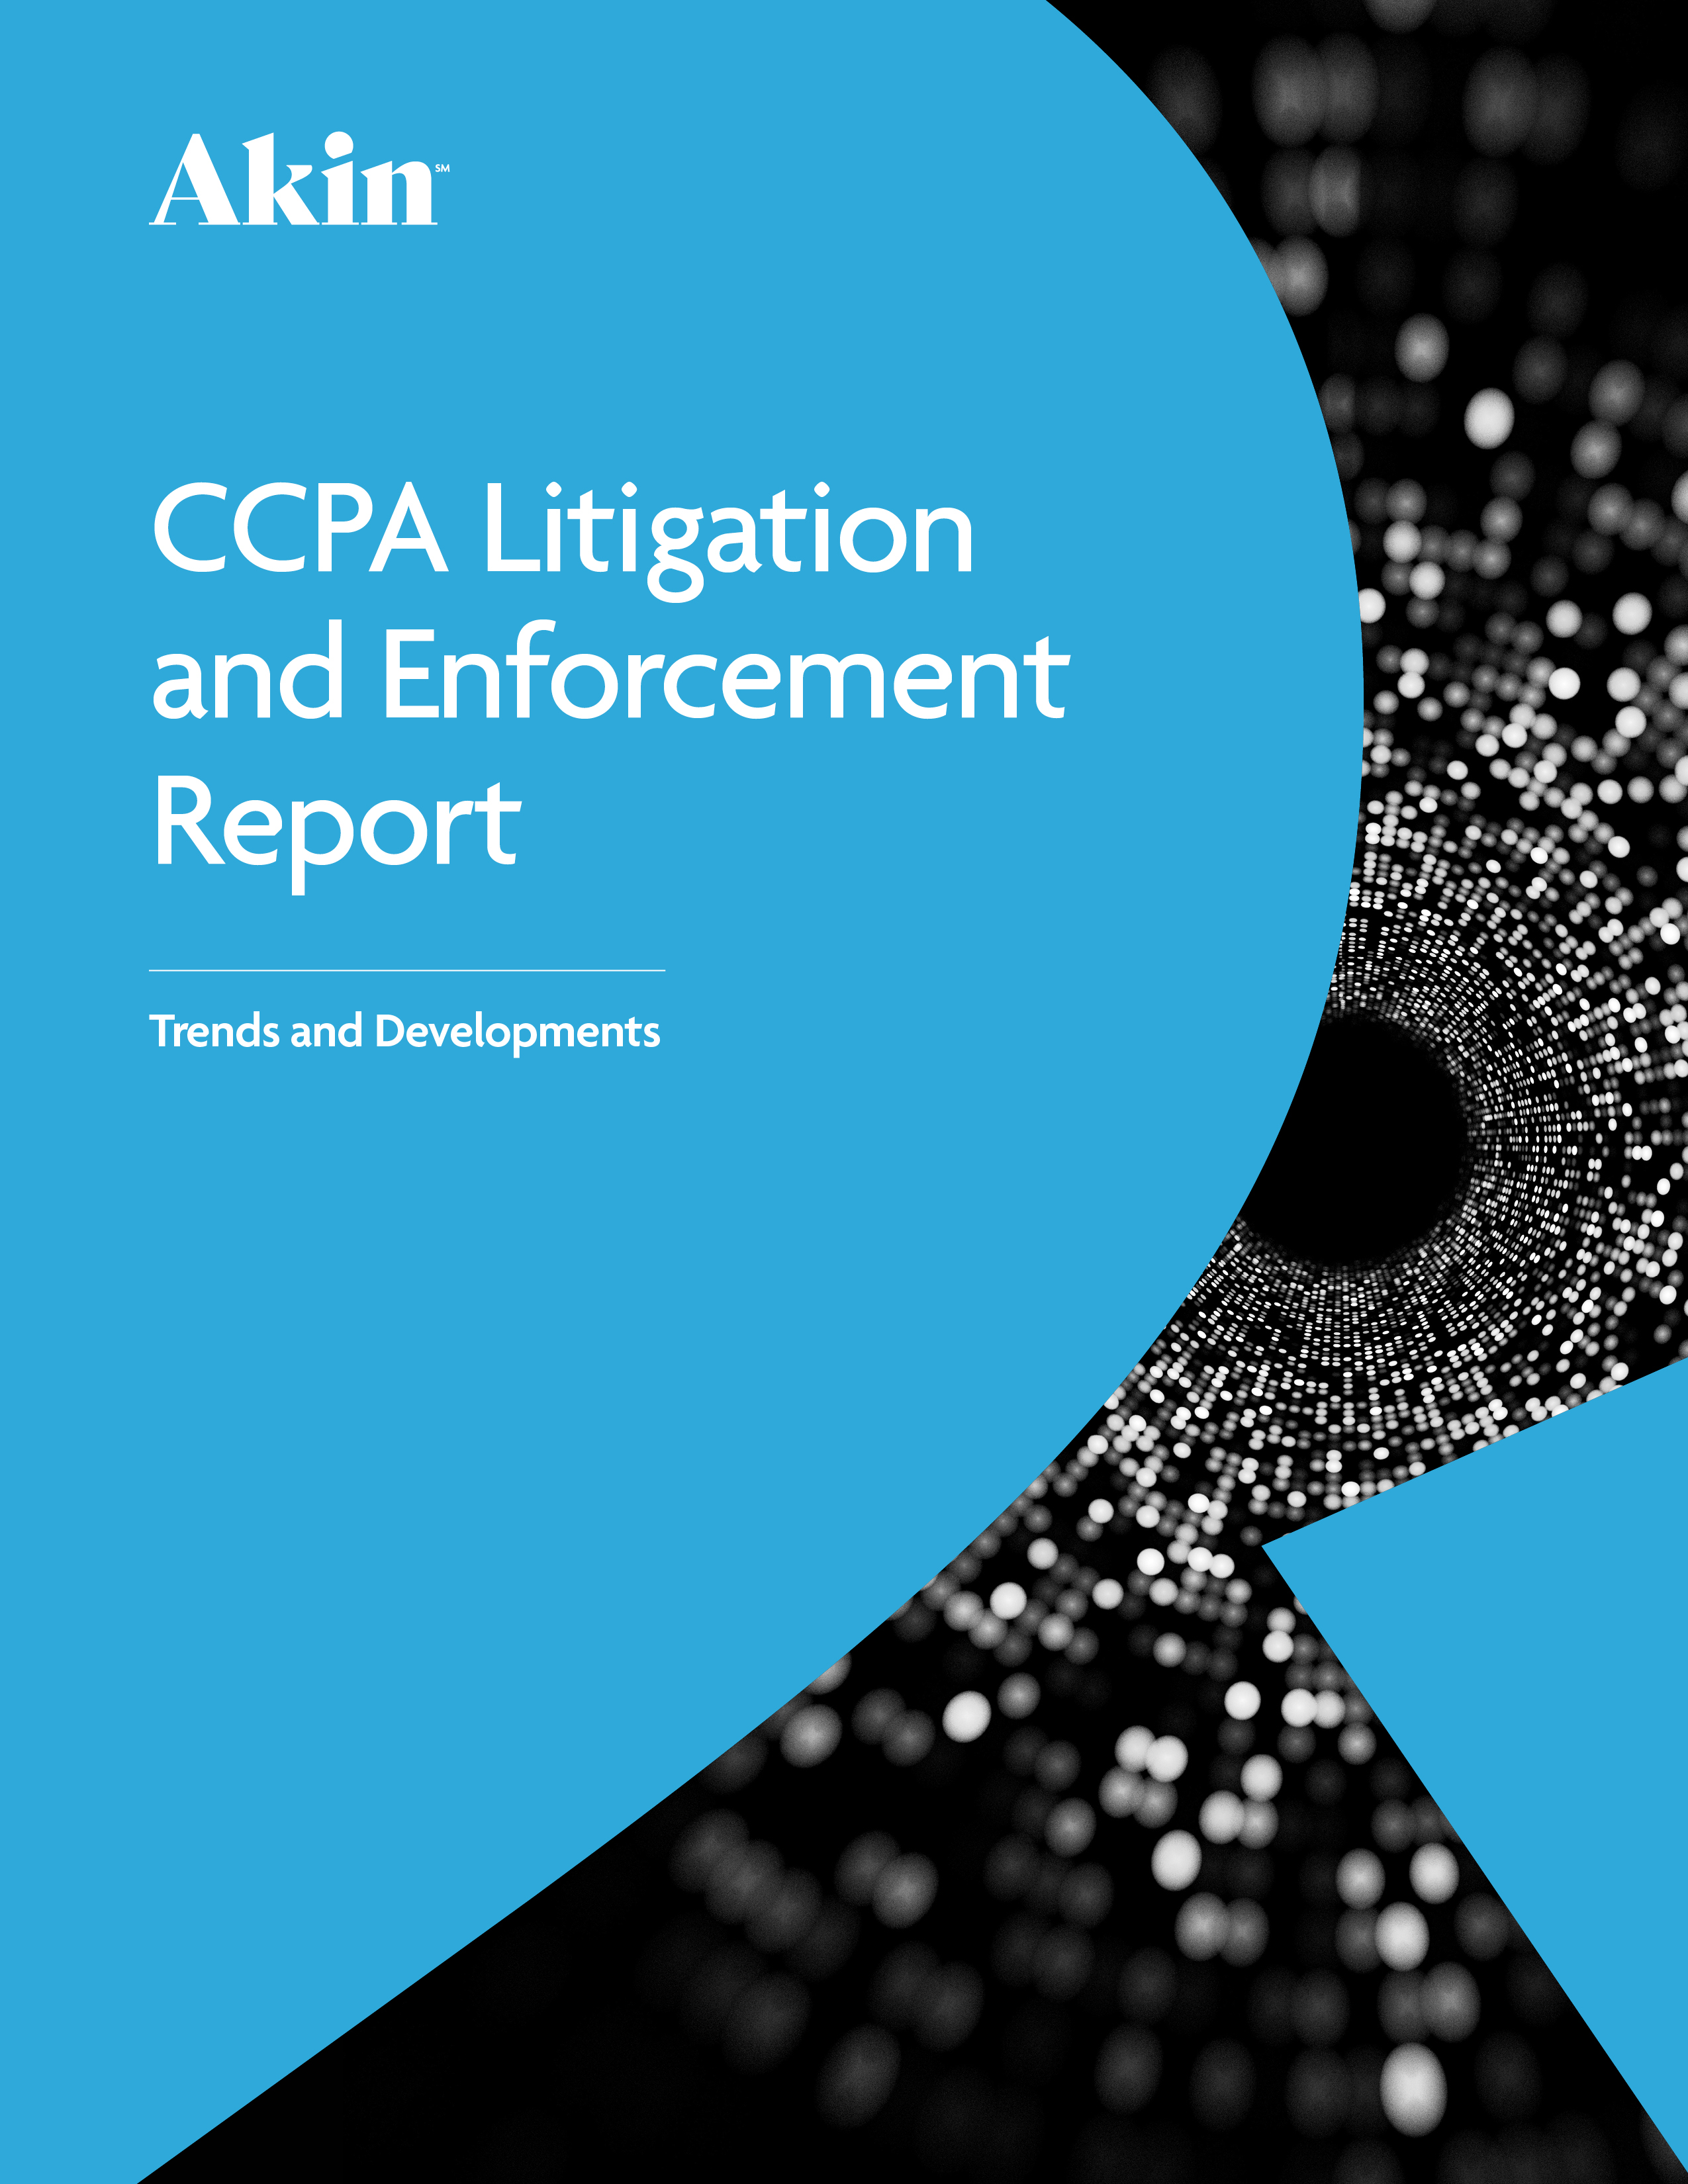 Akin CCPA Report Cover Image